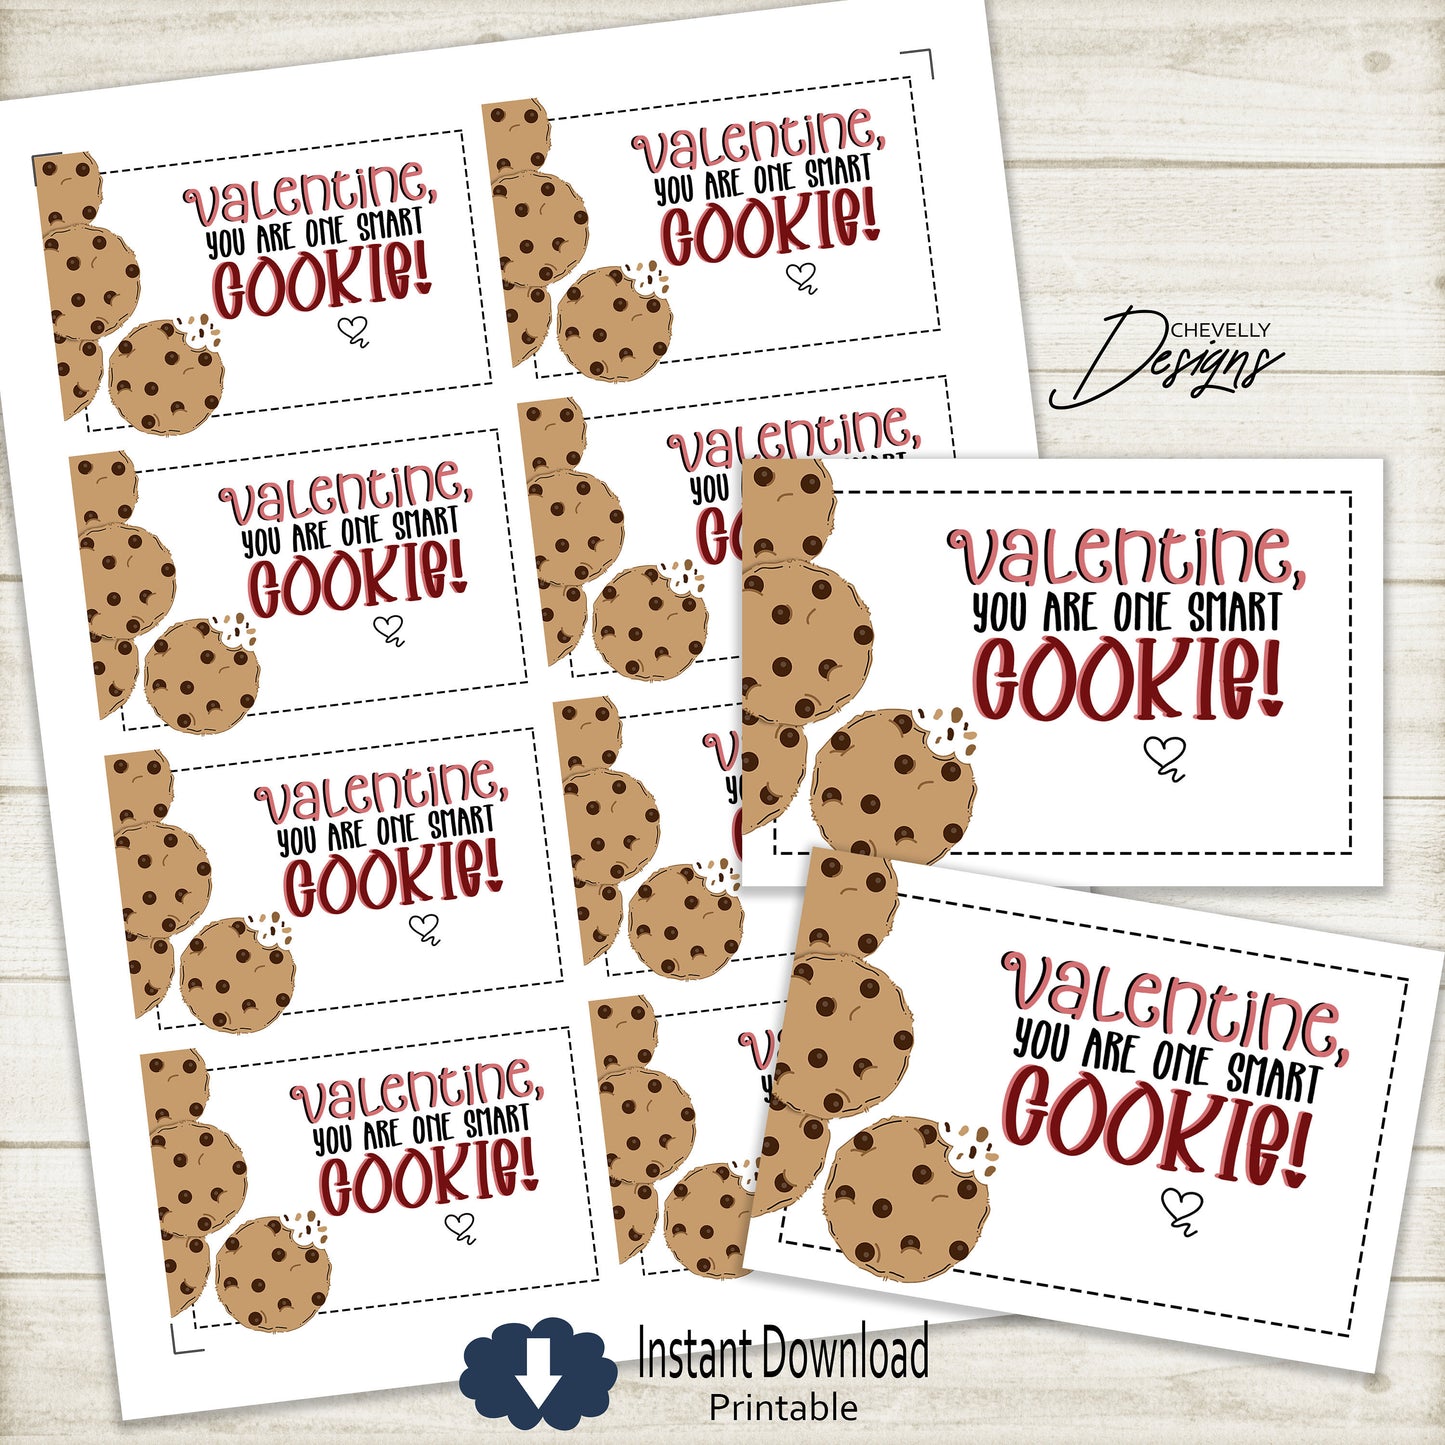 Printable Smart Cookie Valentines >>>Instant Digital Download<<<